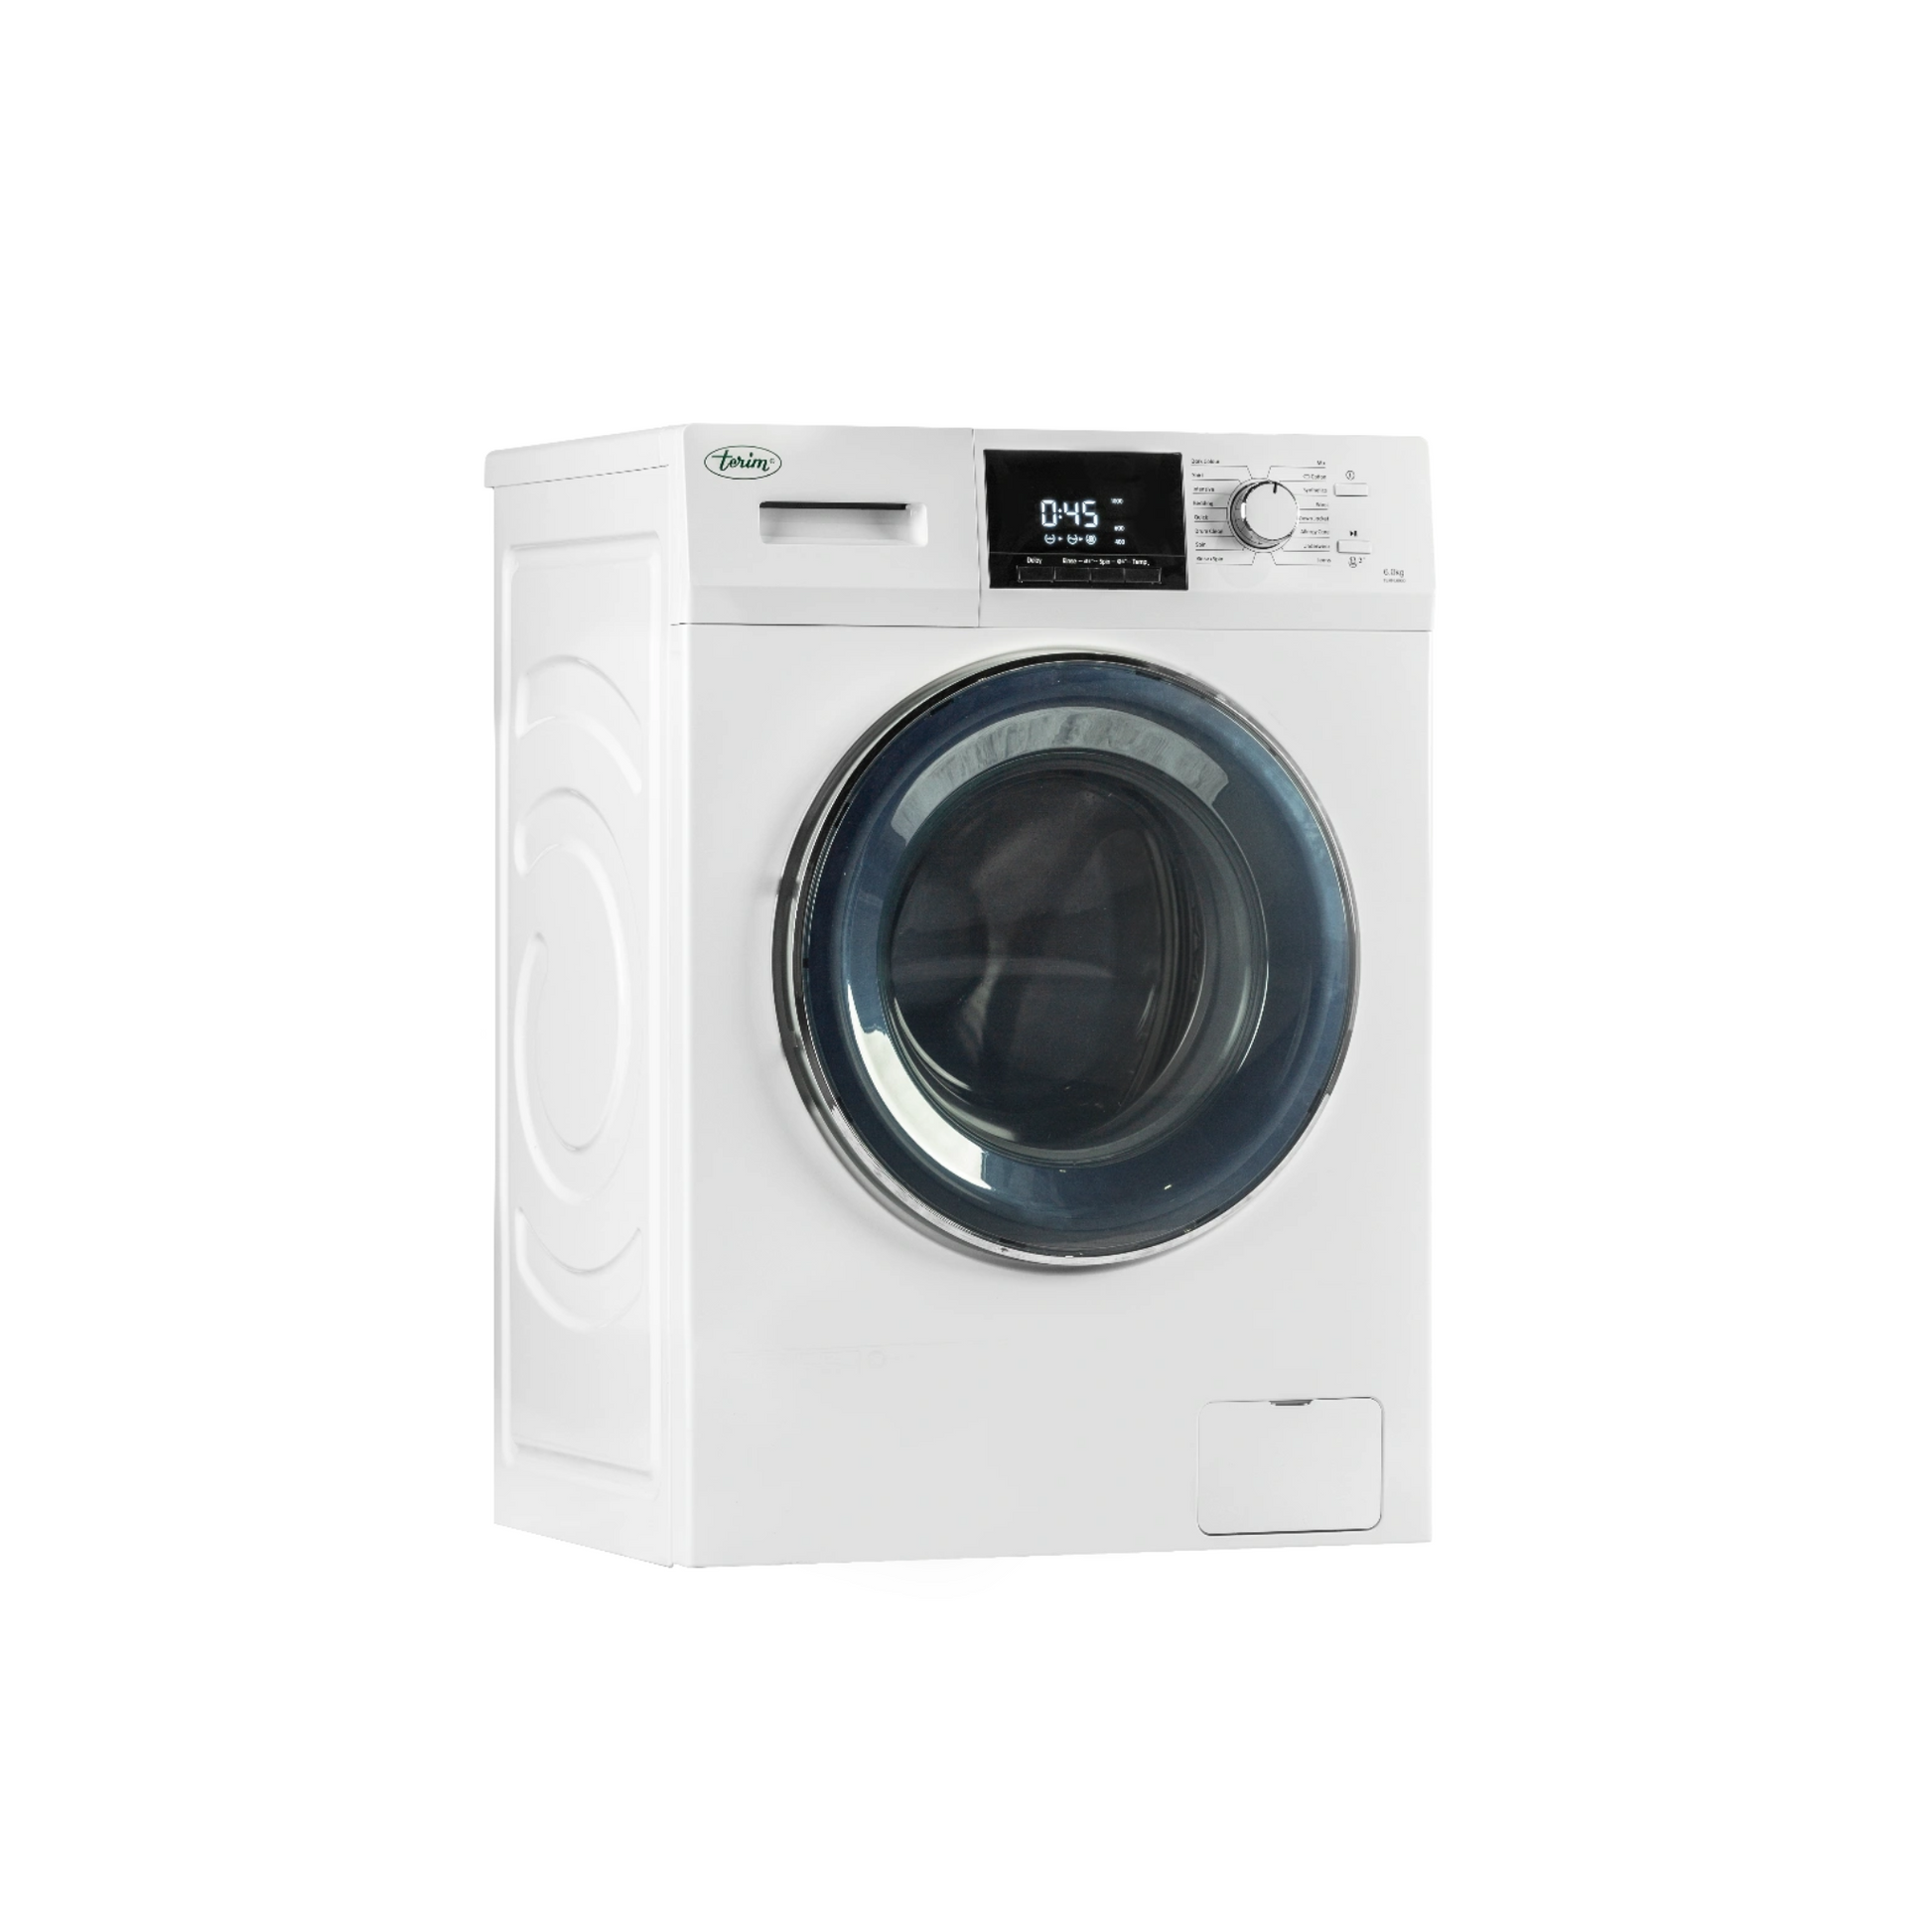 Terim 6KG Fully Automatic Washing Machine, TERFL6900